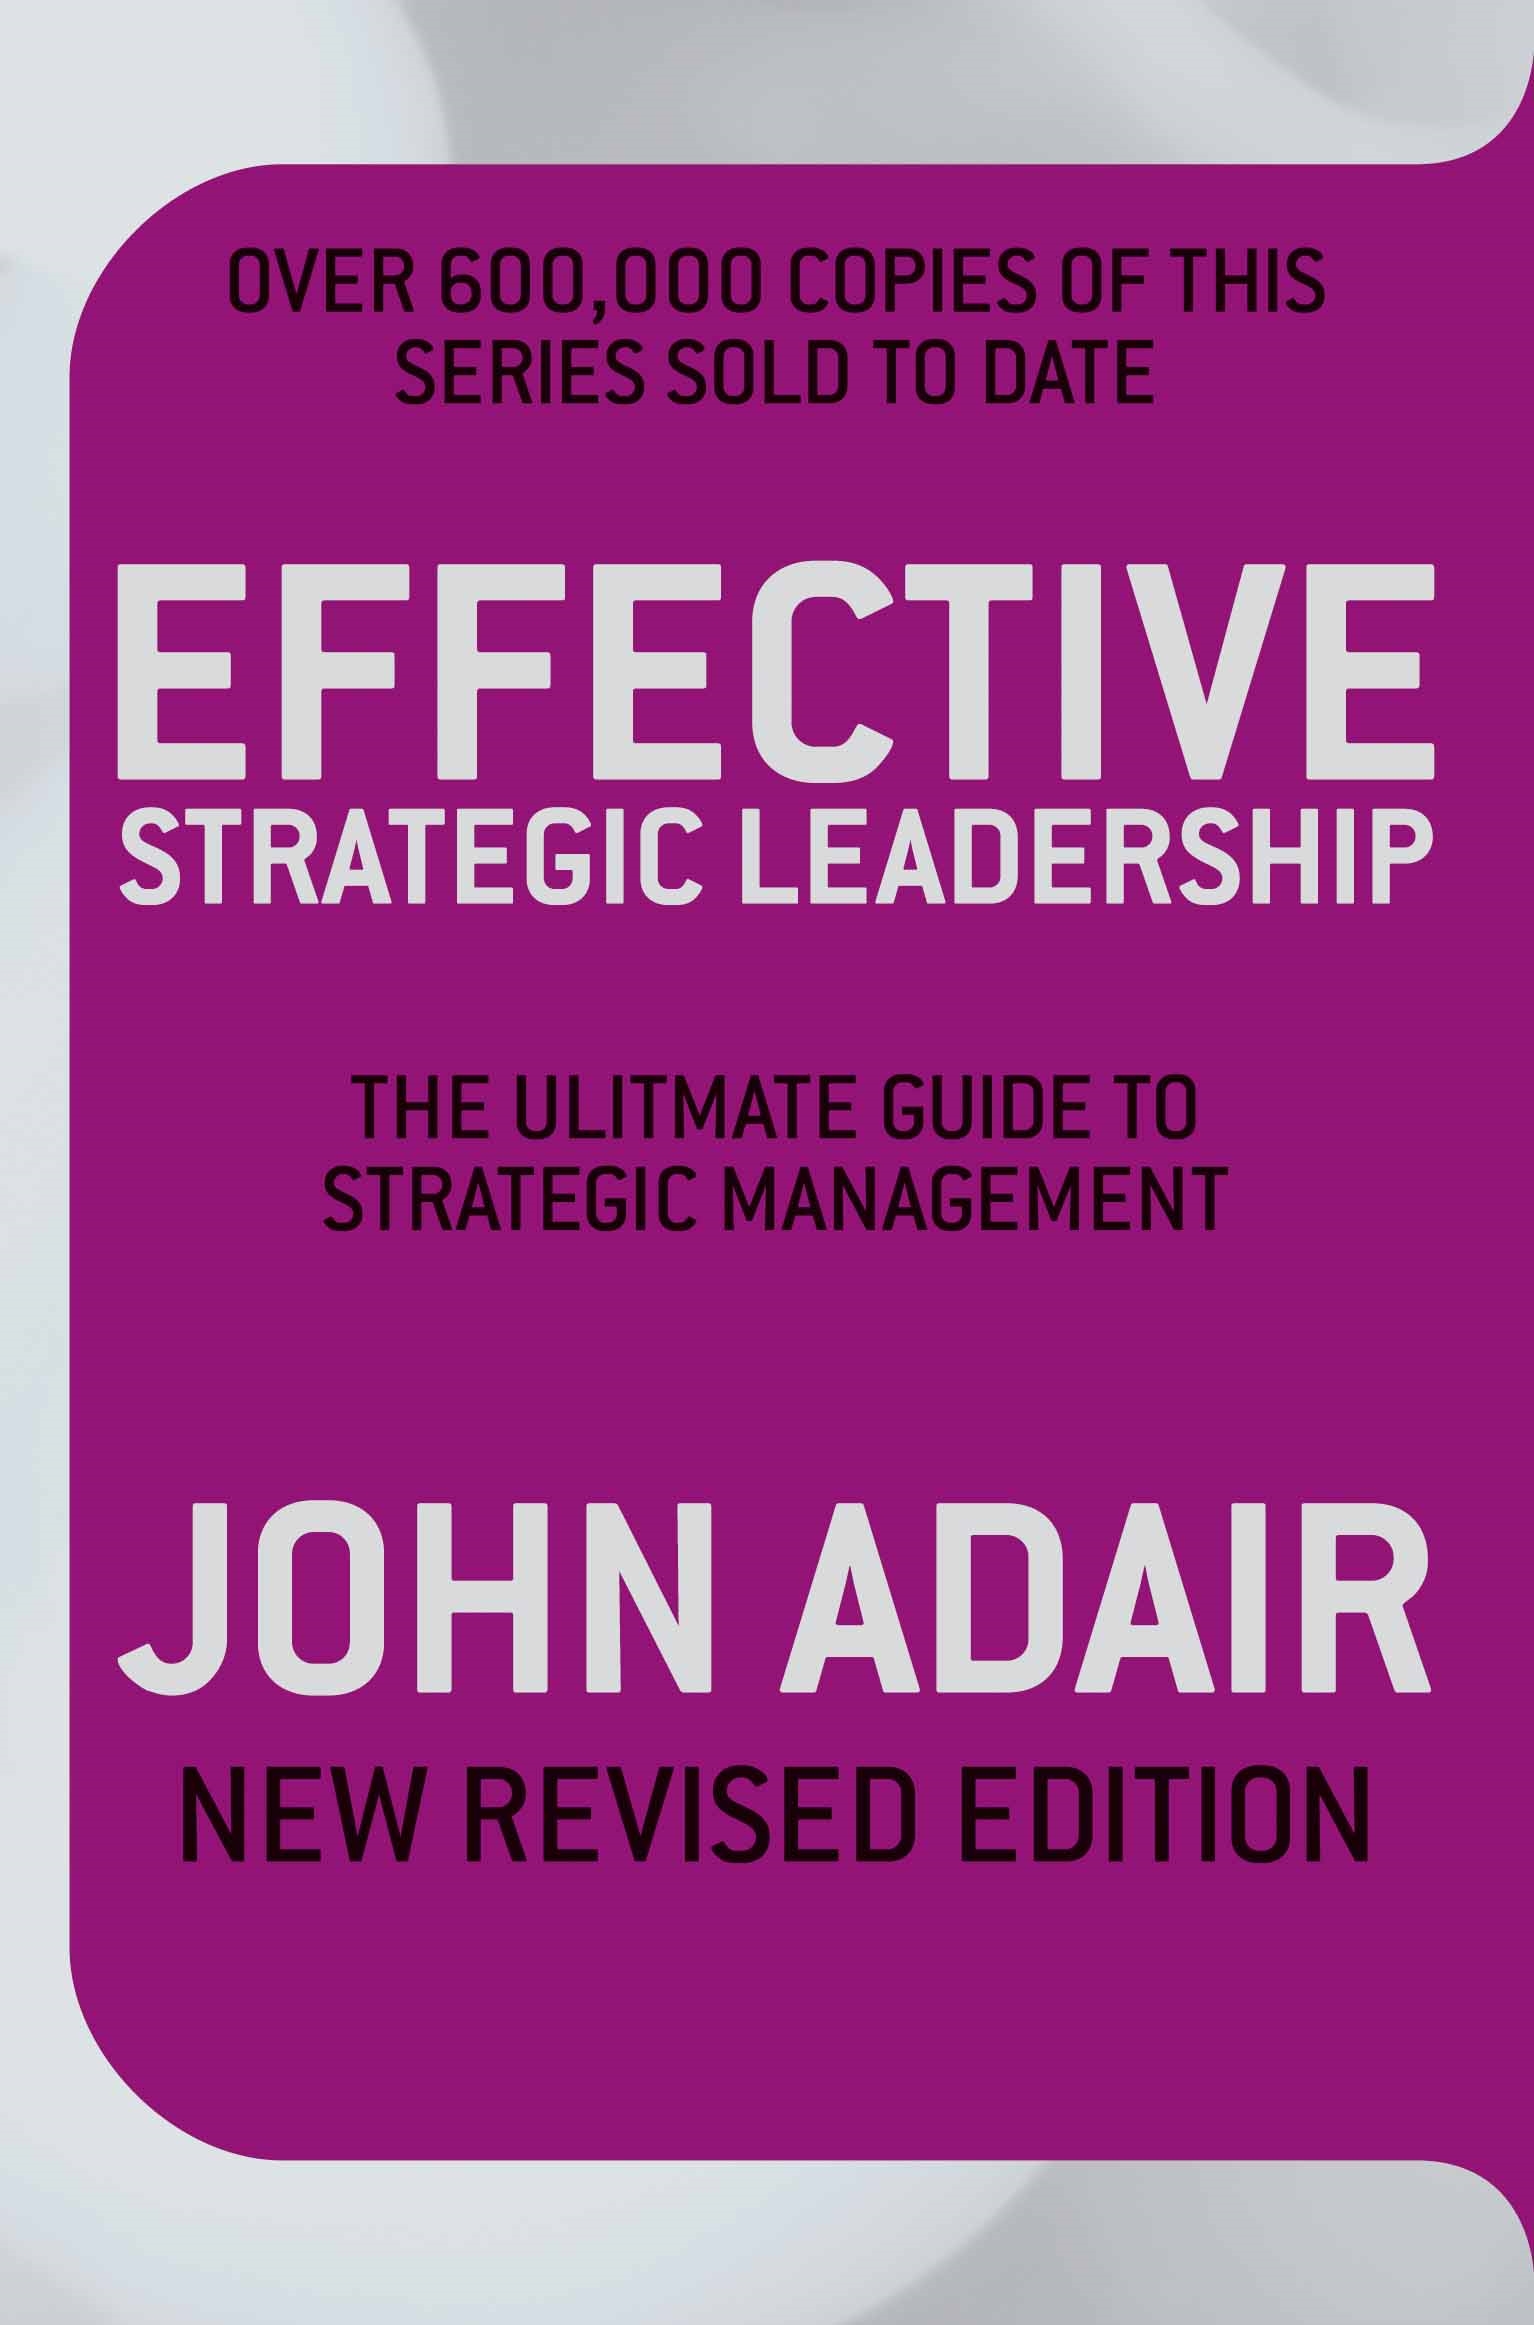 Effective Strategic Leadership (NEW REVISED EDITION)